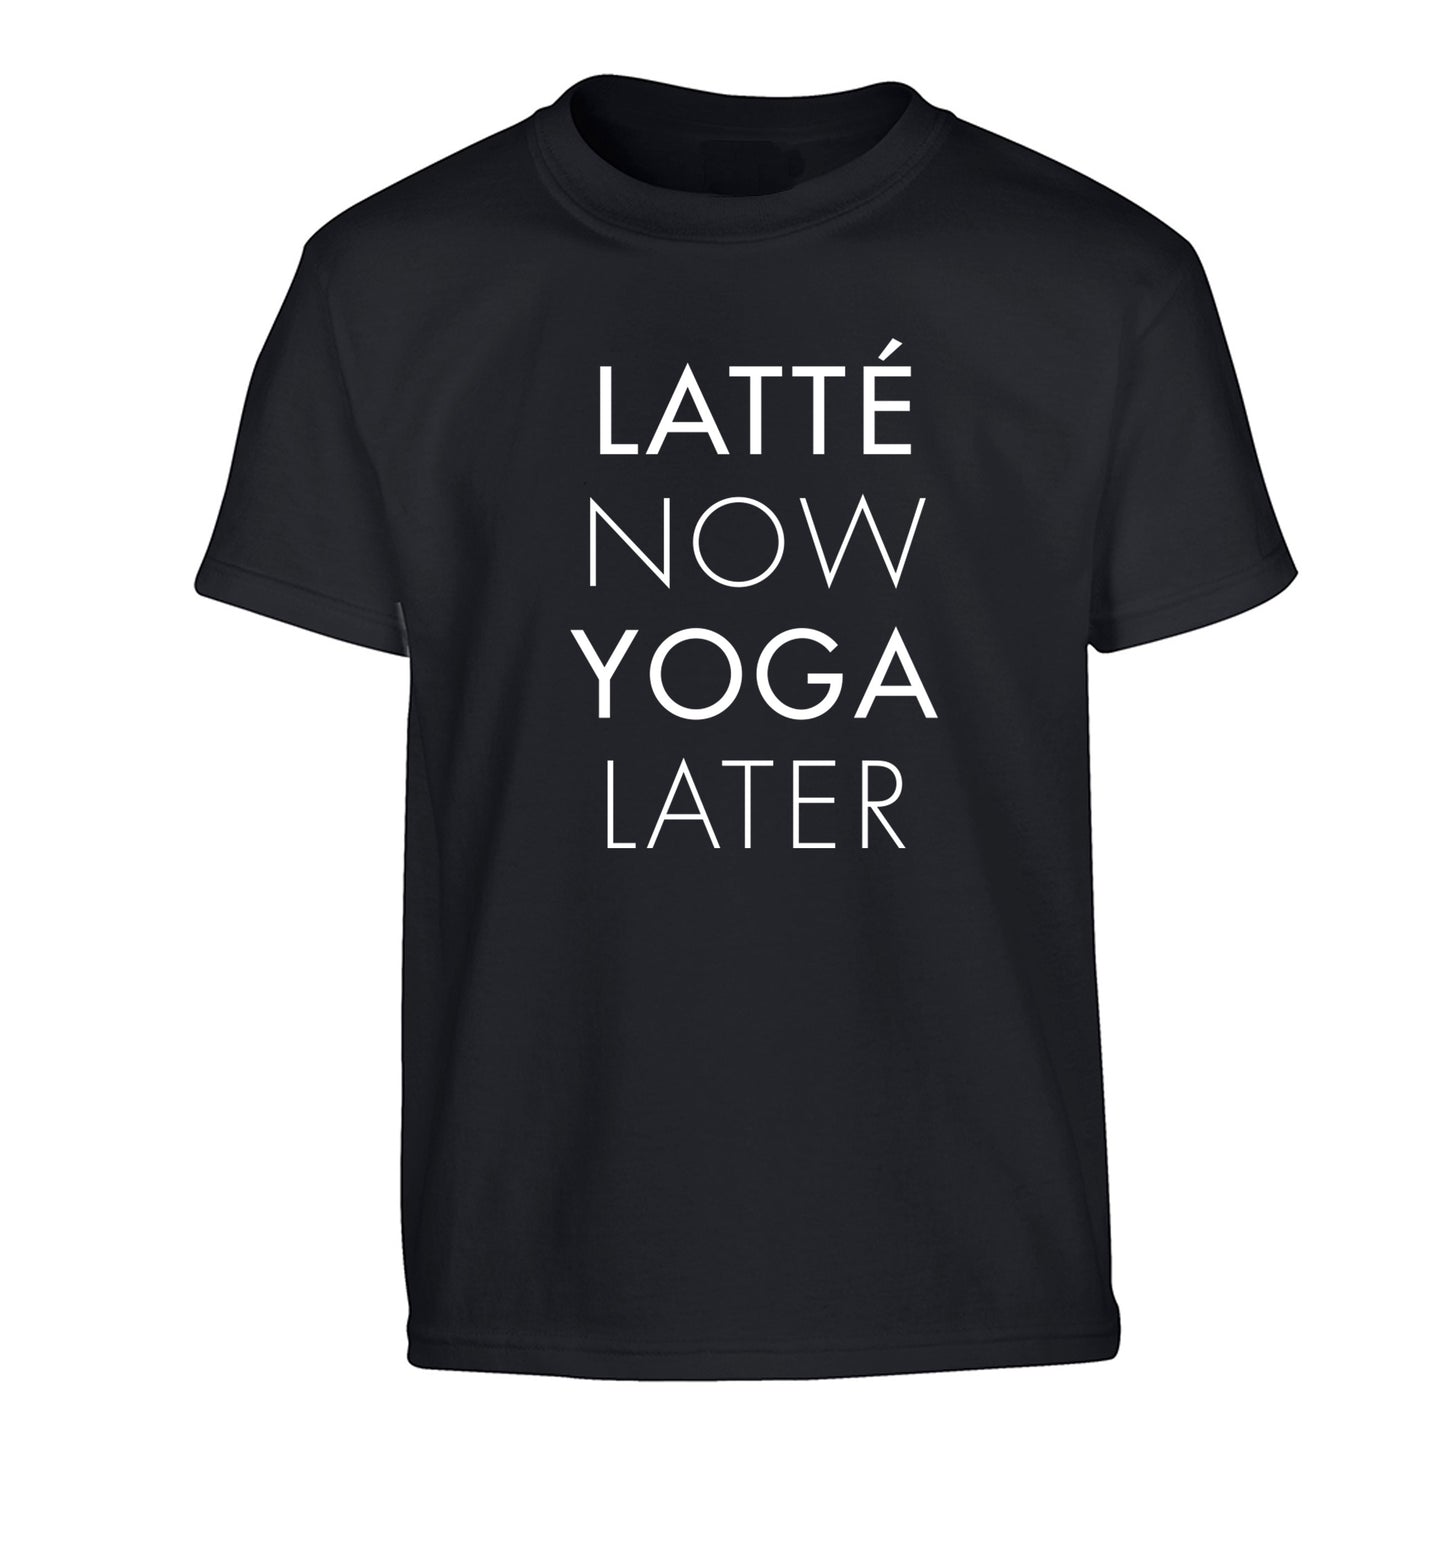 Latte now yoga later Children's black Tshirt 12-14 Years